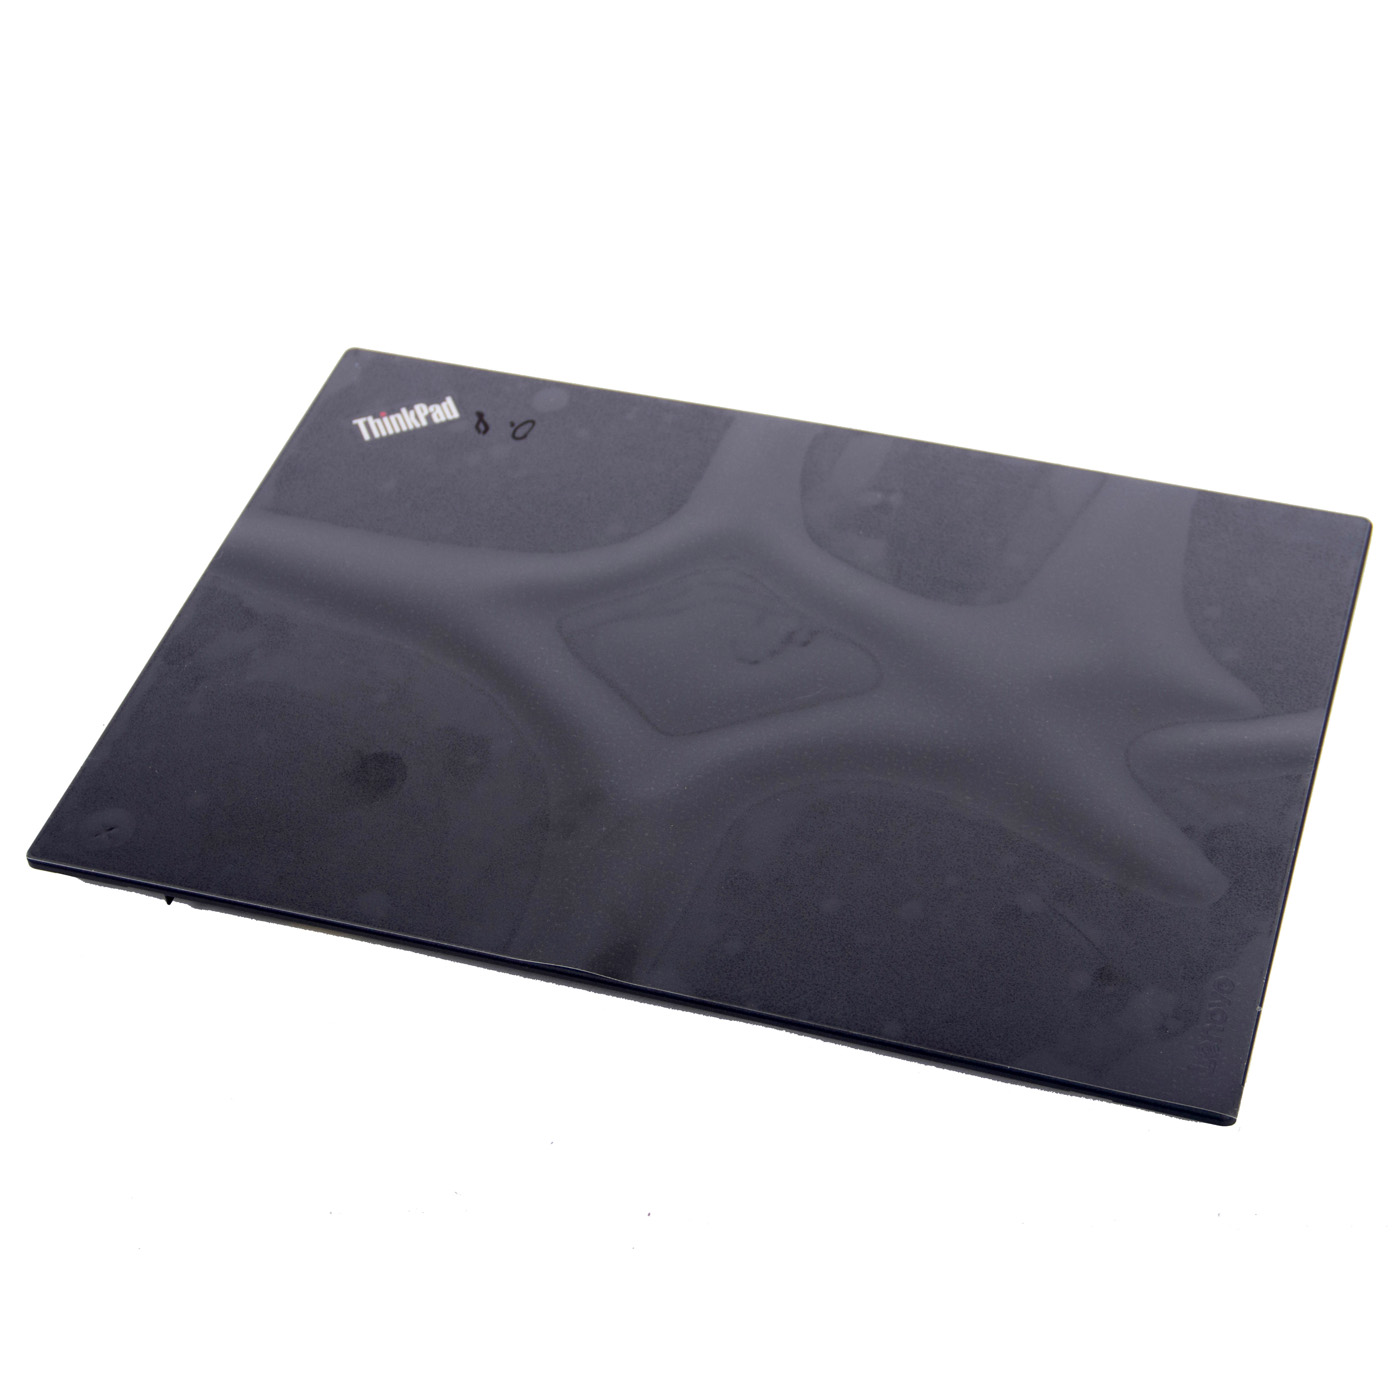 LCD back cover Lenovo ThinkPad T460p T470p WQHD 